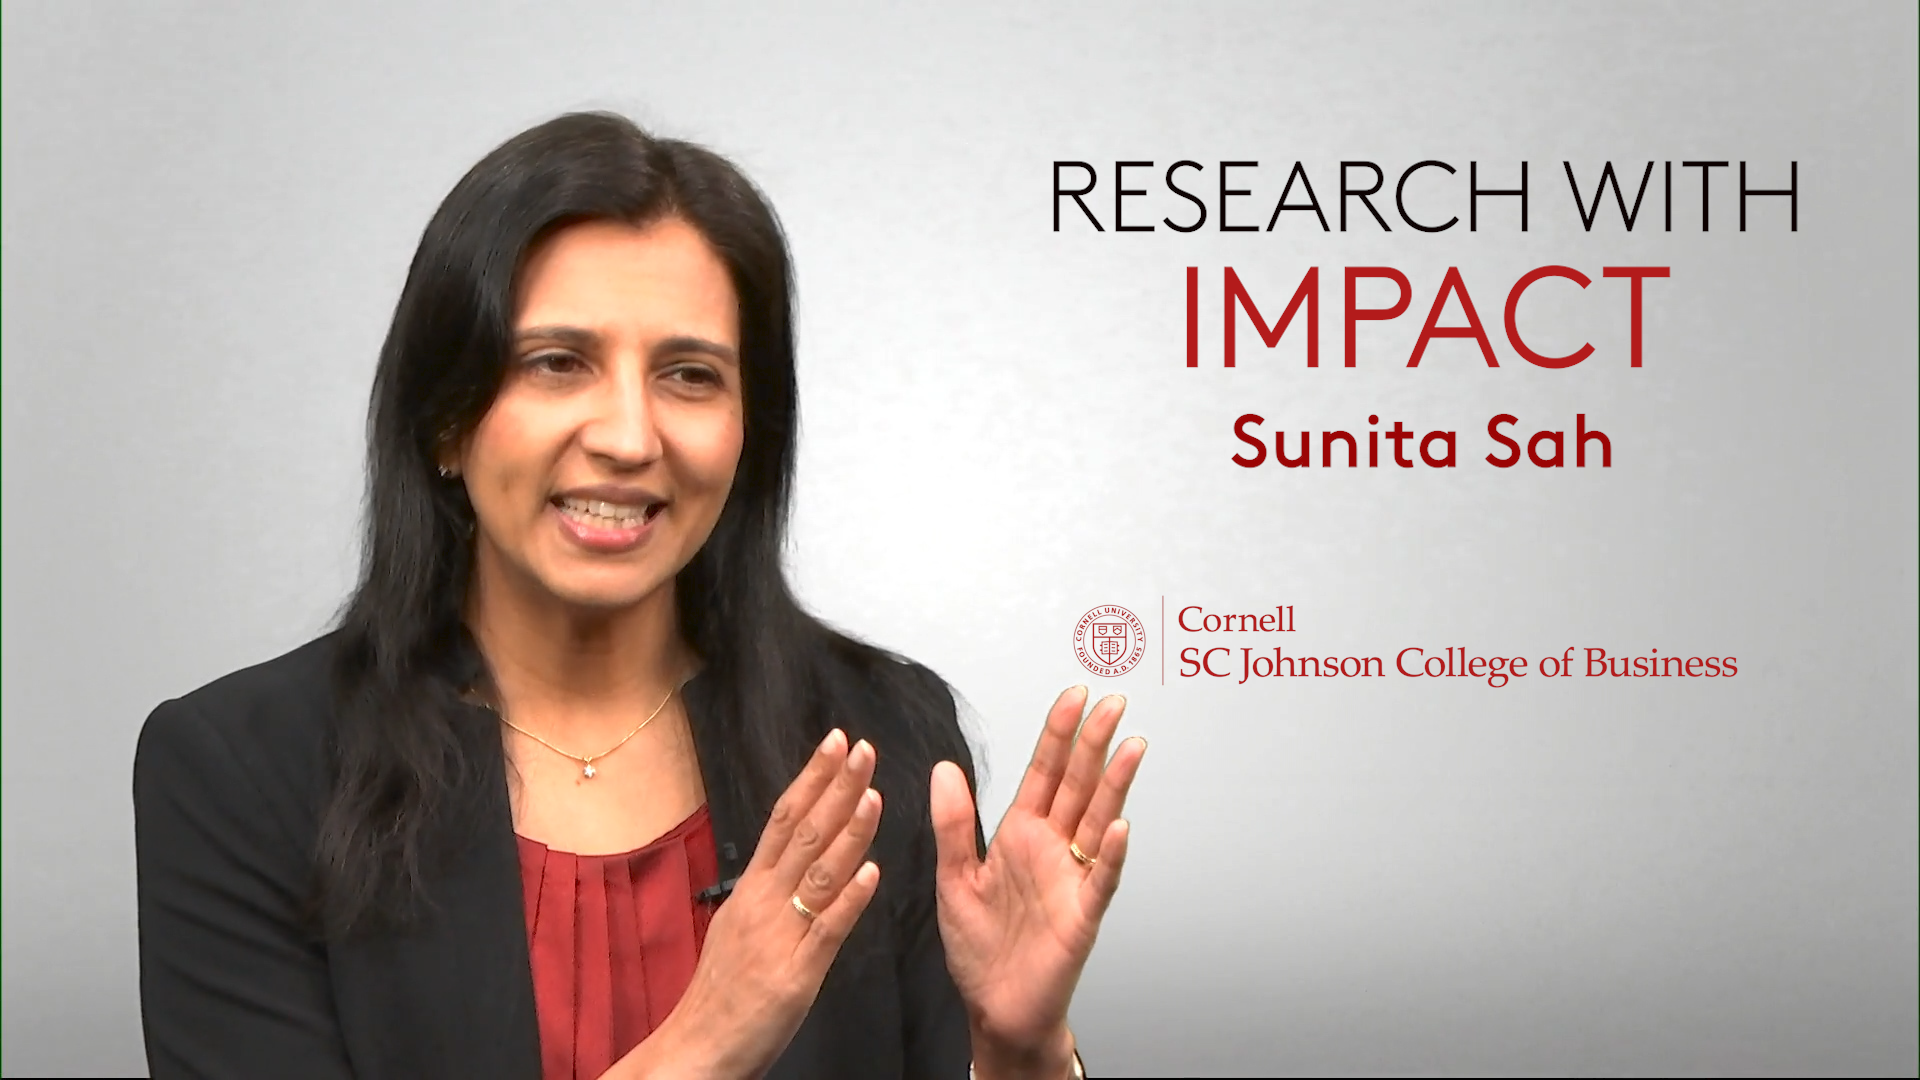 Sunita Sah's faculty page for the Cornell SC Johnson